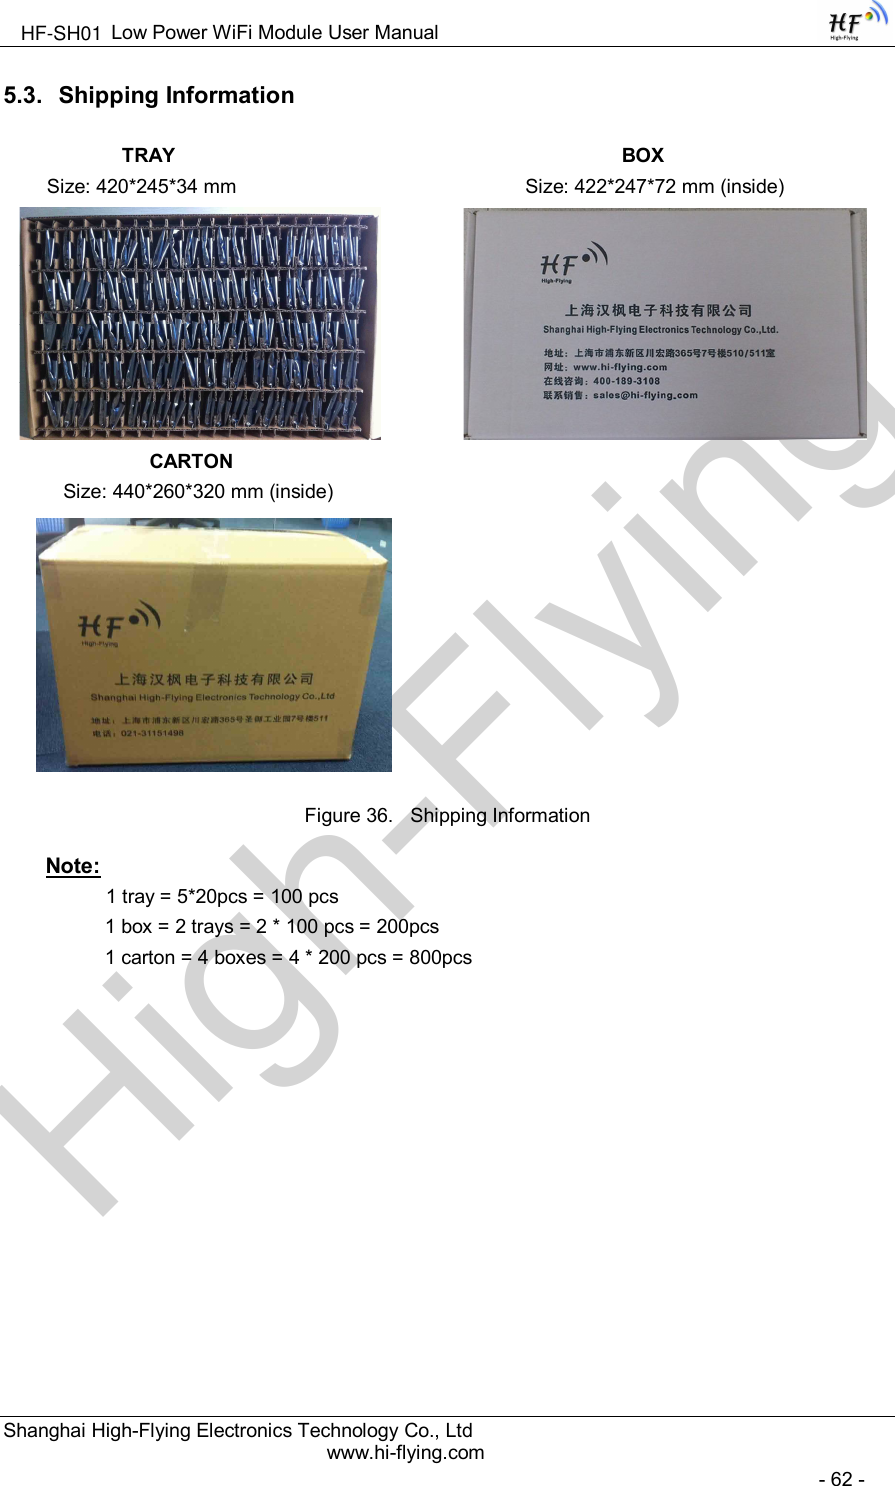 High-FlyingLow Power WiFi Module User ManualShanghai High-Flying Electronics Technology Co., Ltdwww.hi-flying.com- 62 -5.3. Shipping InformationTRAY  BOXSize: 420*245*34 mm  Size: 422*247*72 mm (inside)CARTONSize: 440*260*320 mm (inside)Figure 36. Shipping InformationNote:1 tray = 5*20pcs = 100 pcs1 box = 2 trays = 2 * 100 pcs = 200pcs1 carton = 4 boxes = 4 * 200 pcs = 800pcsHF-SH01